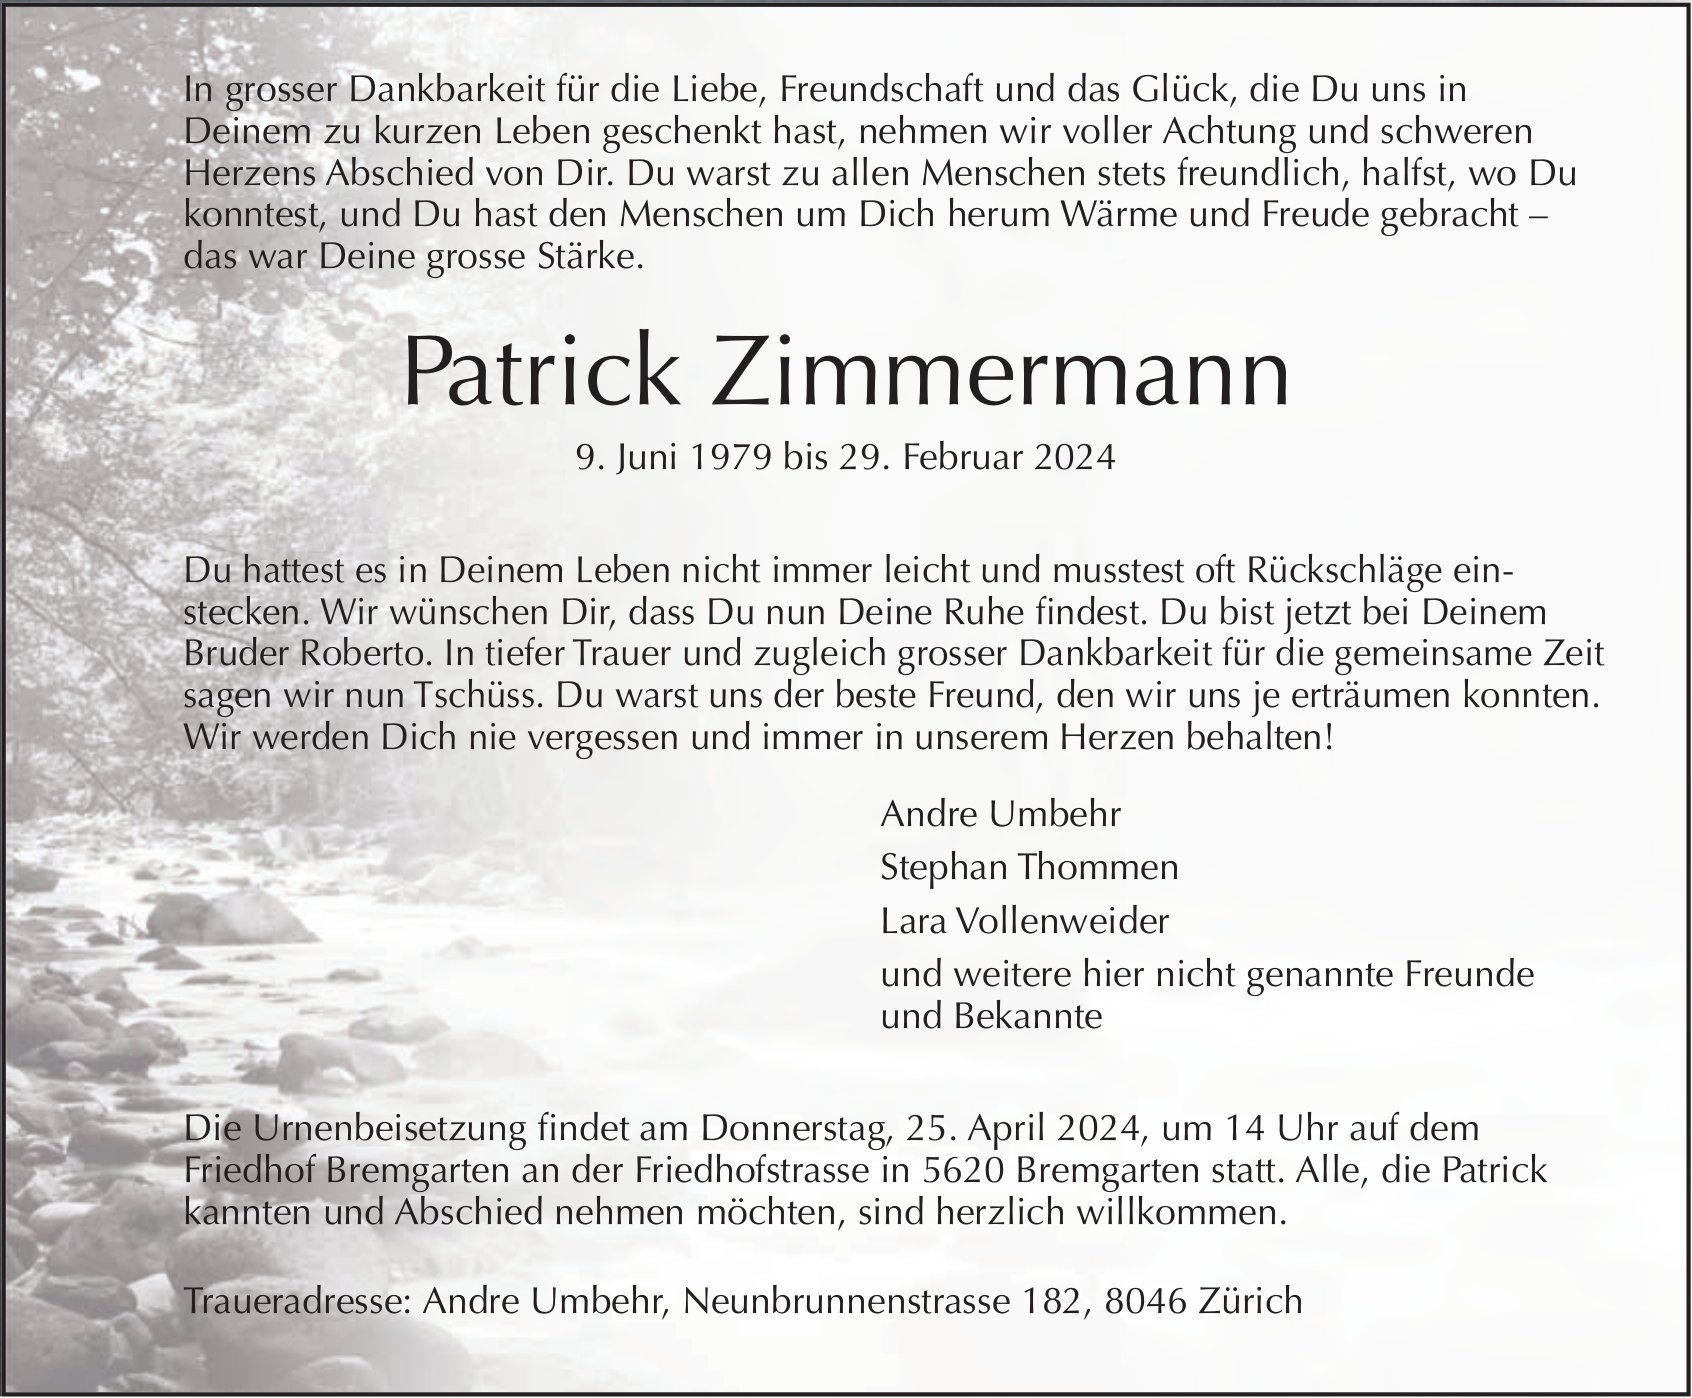 Patrick Zimmermann, Februar 2024 / TA